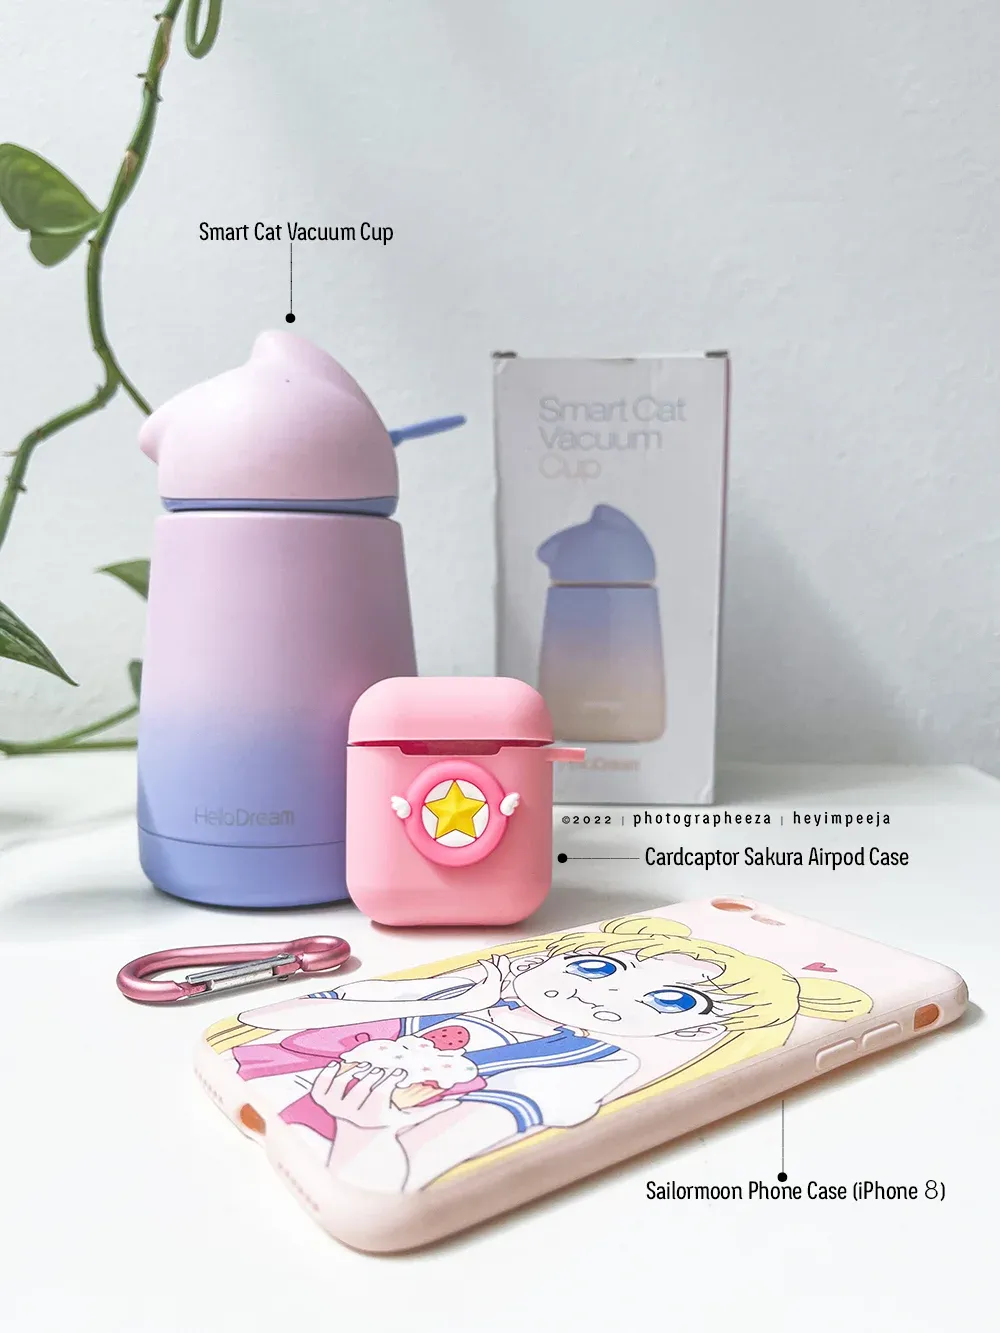 Smart Cat Vacuum Cup Sailormoon Phone Case  iPhone 8 Cardcaptor Sakura Airpod Case